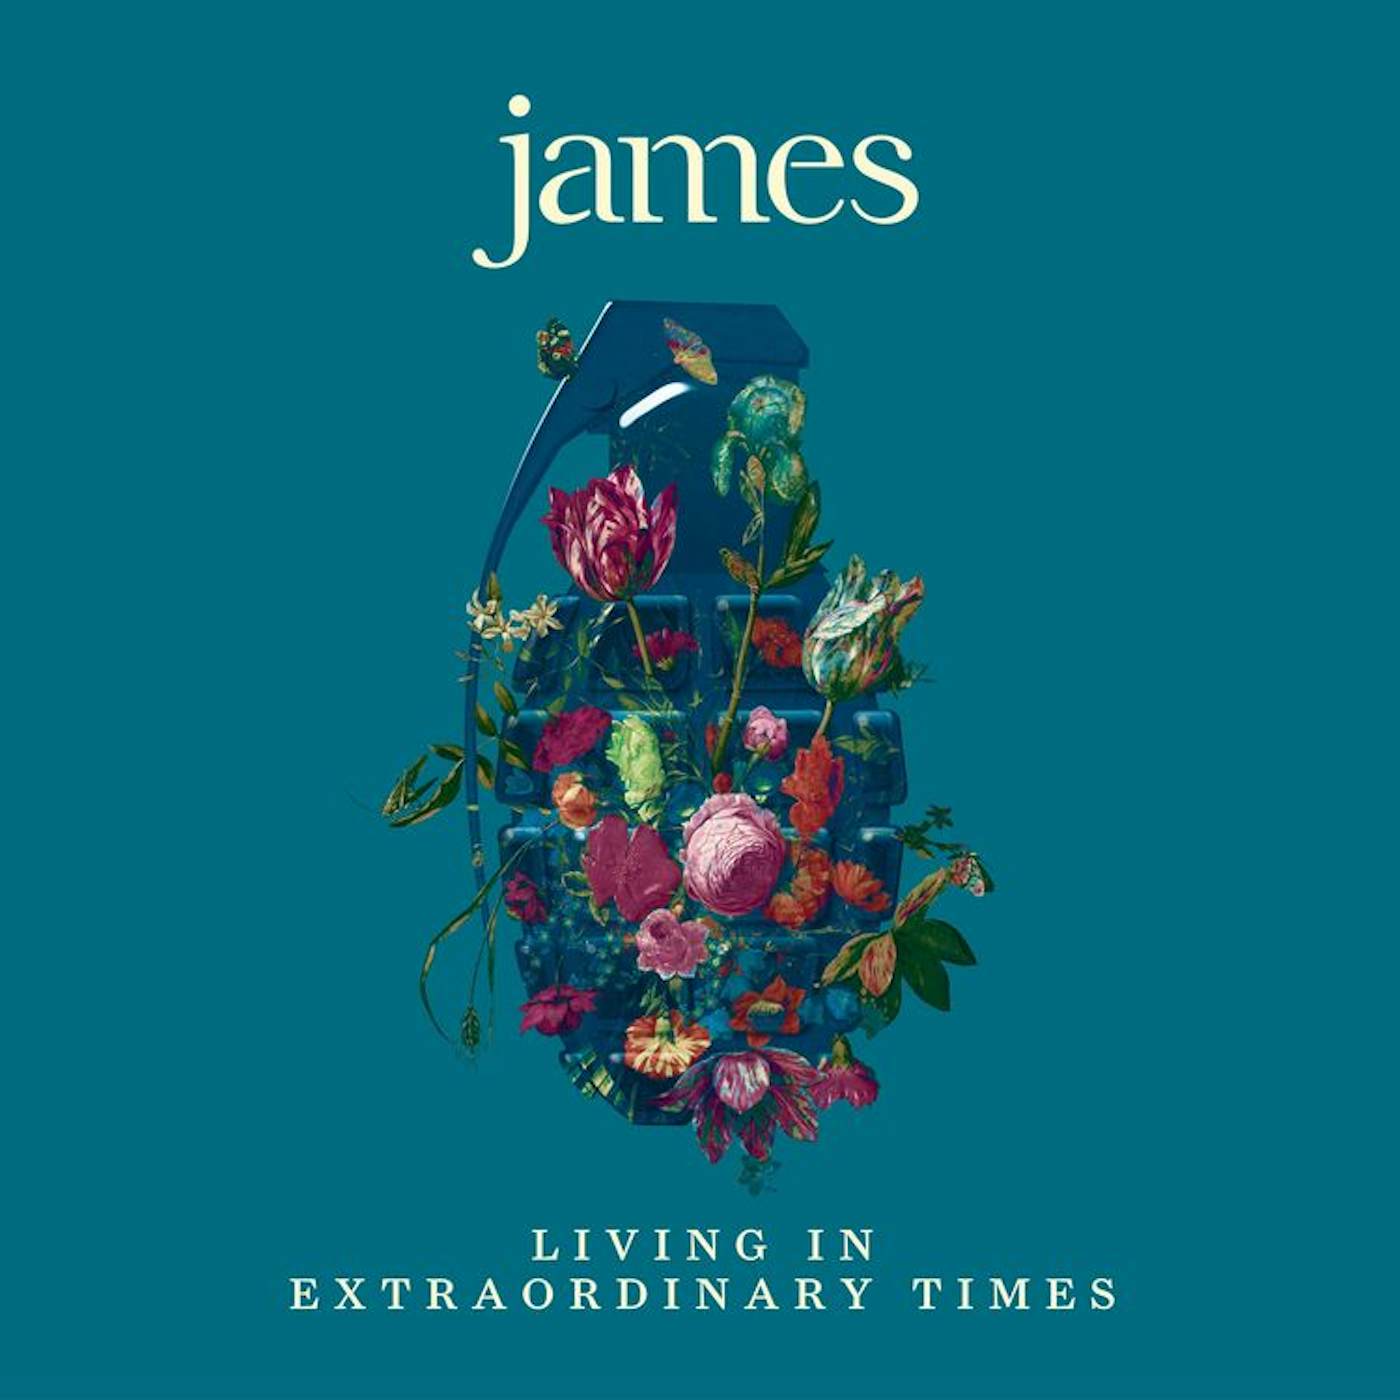 James LIVING IN EXTRAORDINARY TIMES (2LP) Vinyl Record